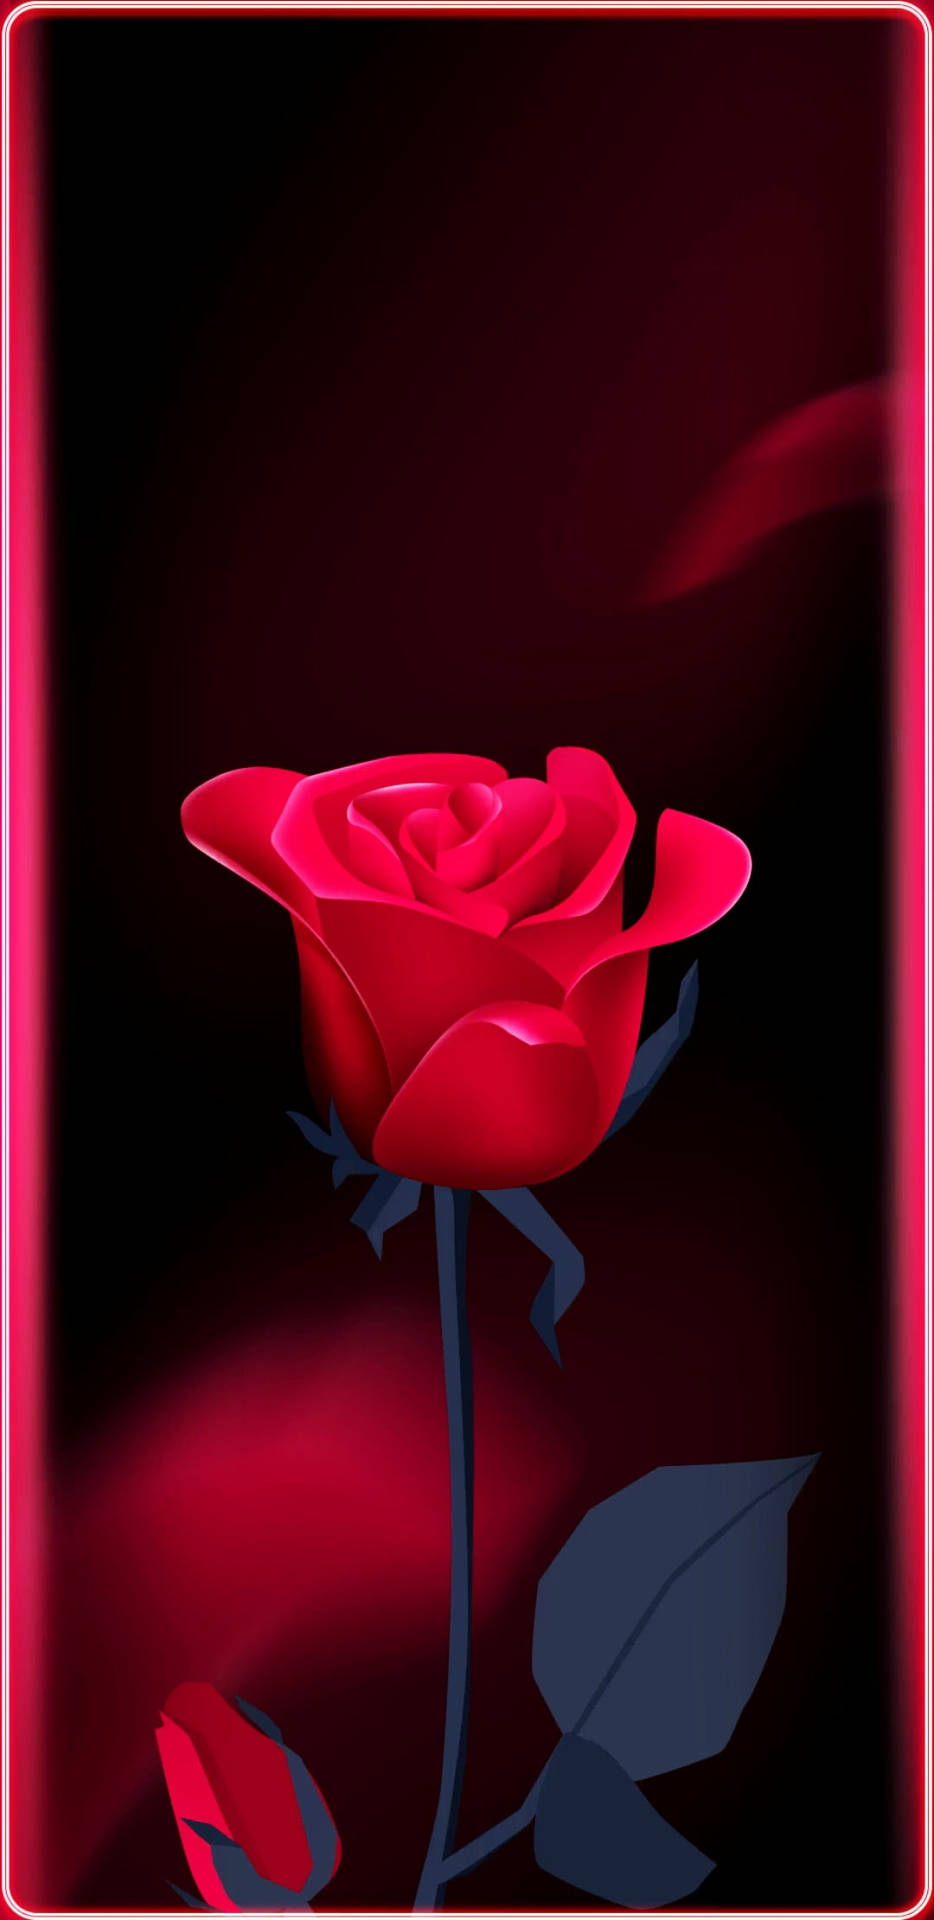 Rose Flower Mobile Background